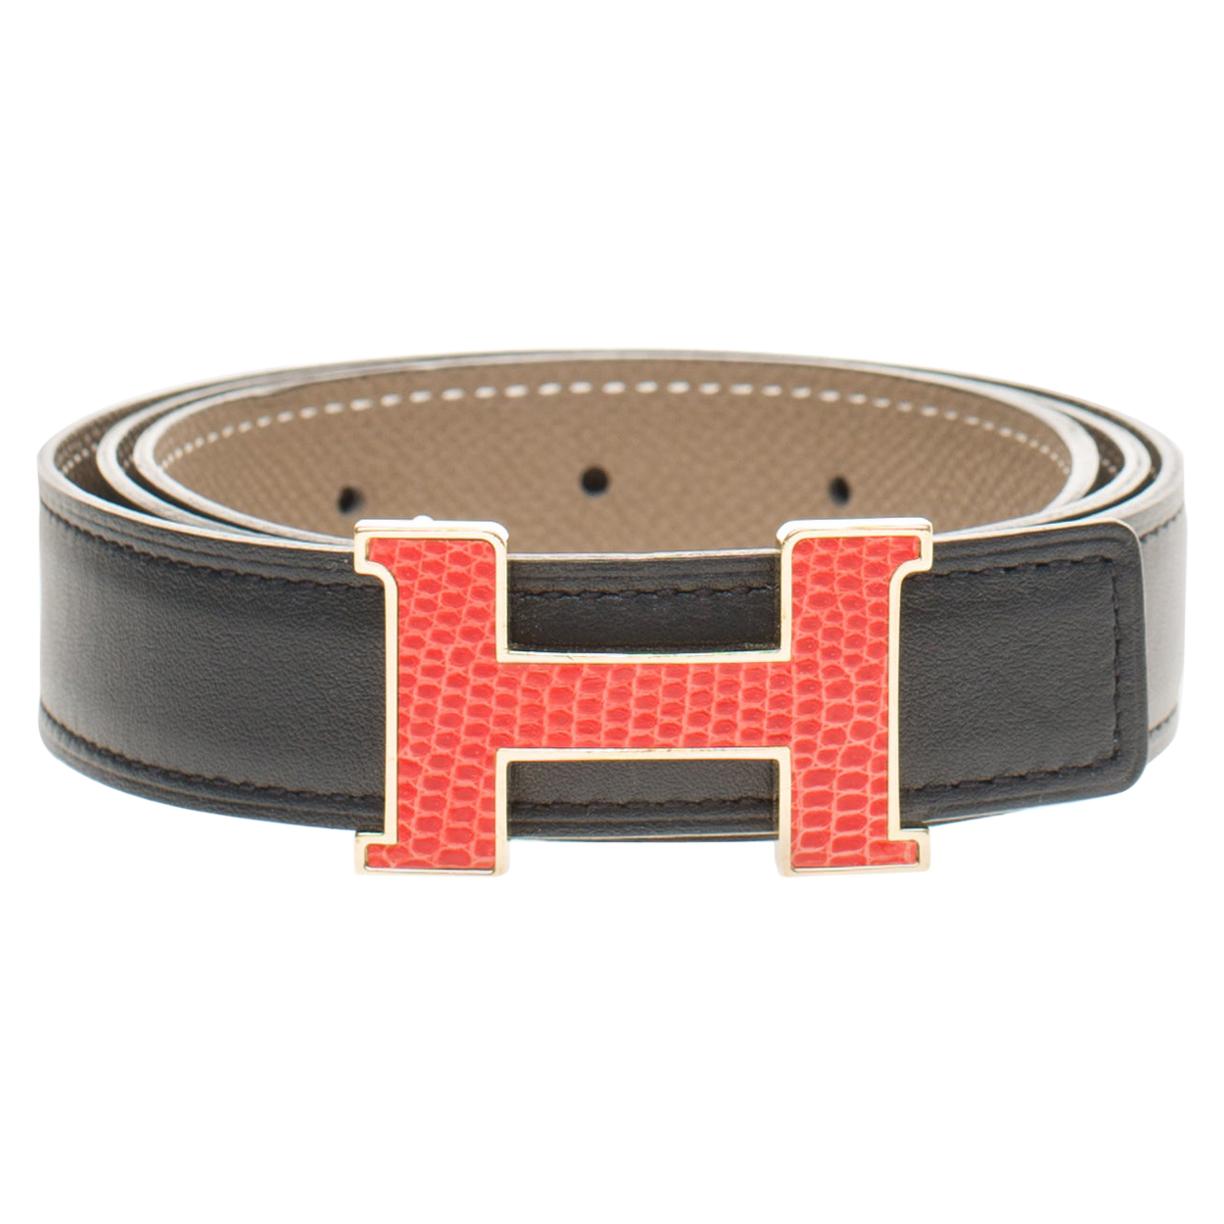 Stunning Hermès belt in black swift and etoupe epsom, buckle in red lizard